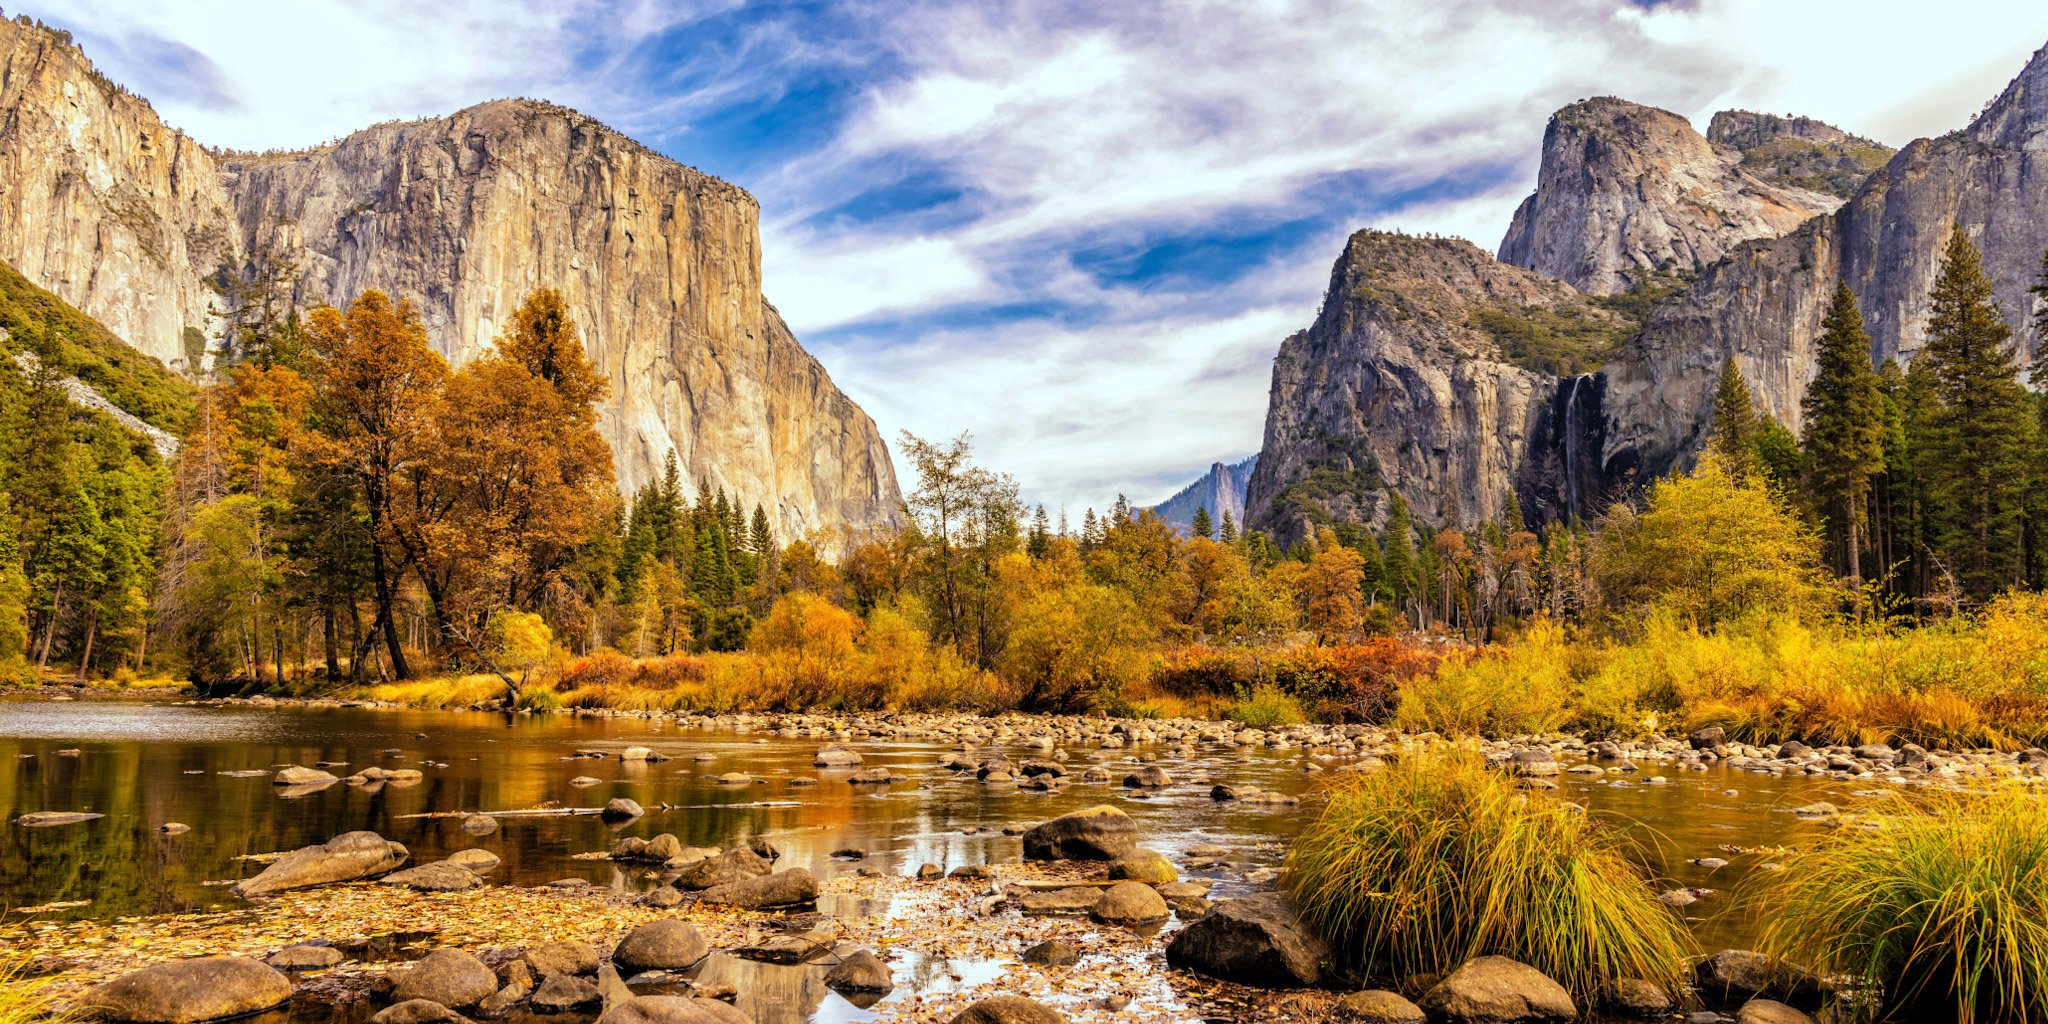 Yosemite - Camping: Trip Preparation & Destination Information